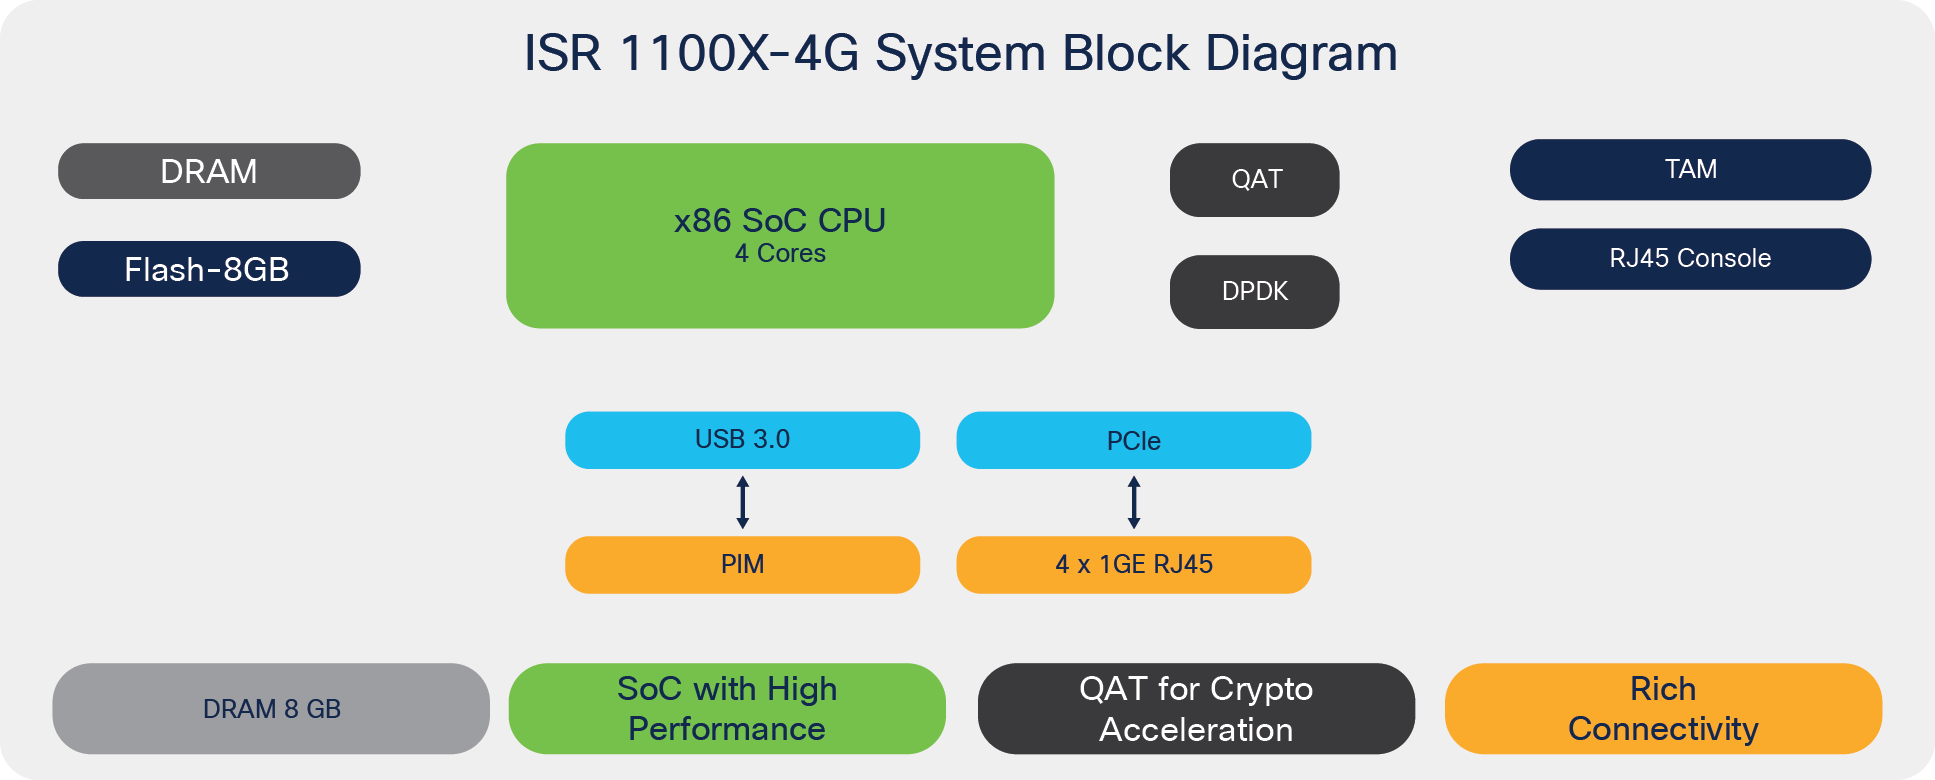 ISR 1100X-4G system block diagram